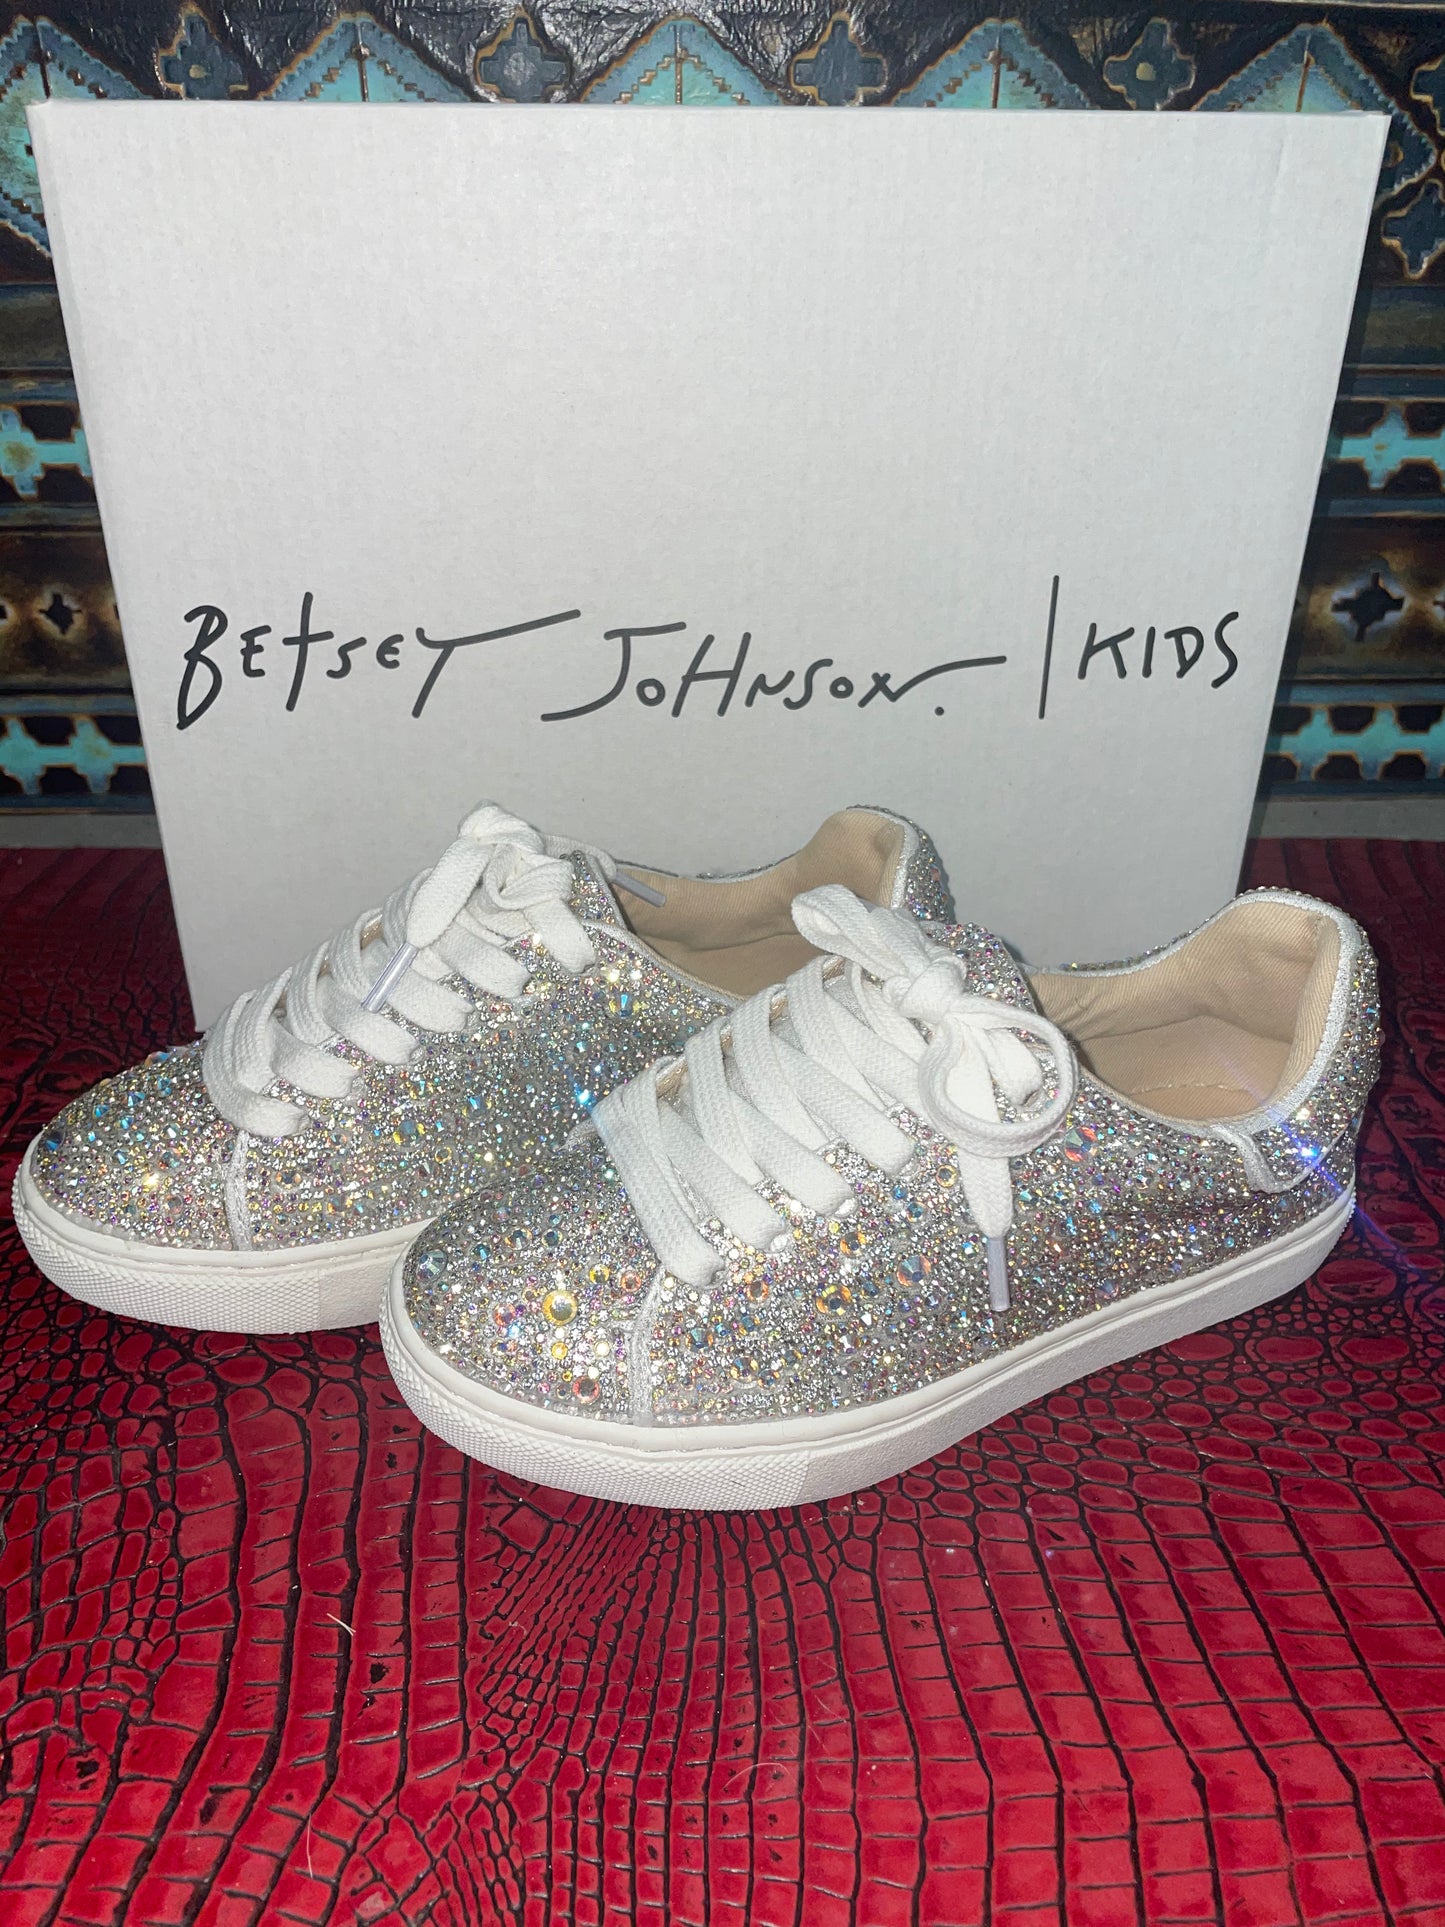 Betsey Johnson Sidny Rhinestone Children's Sneakers